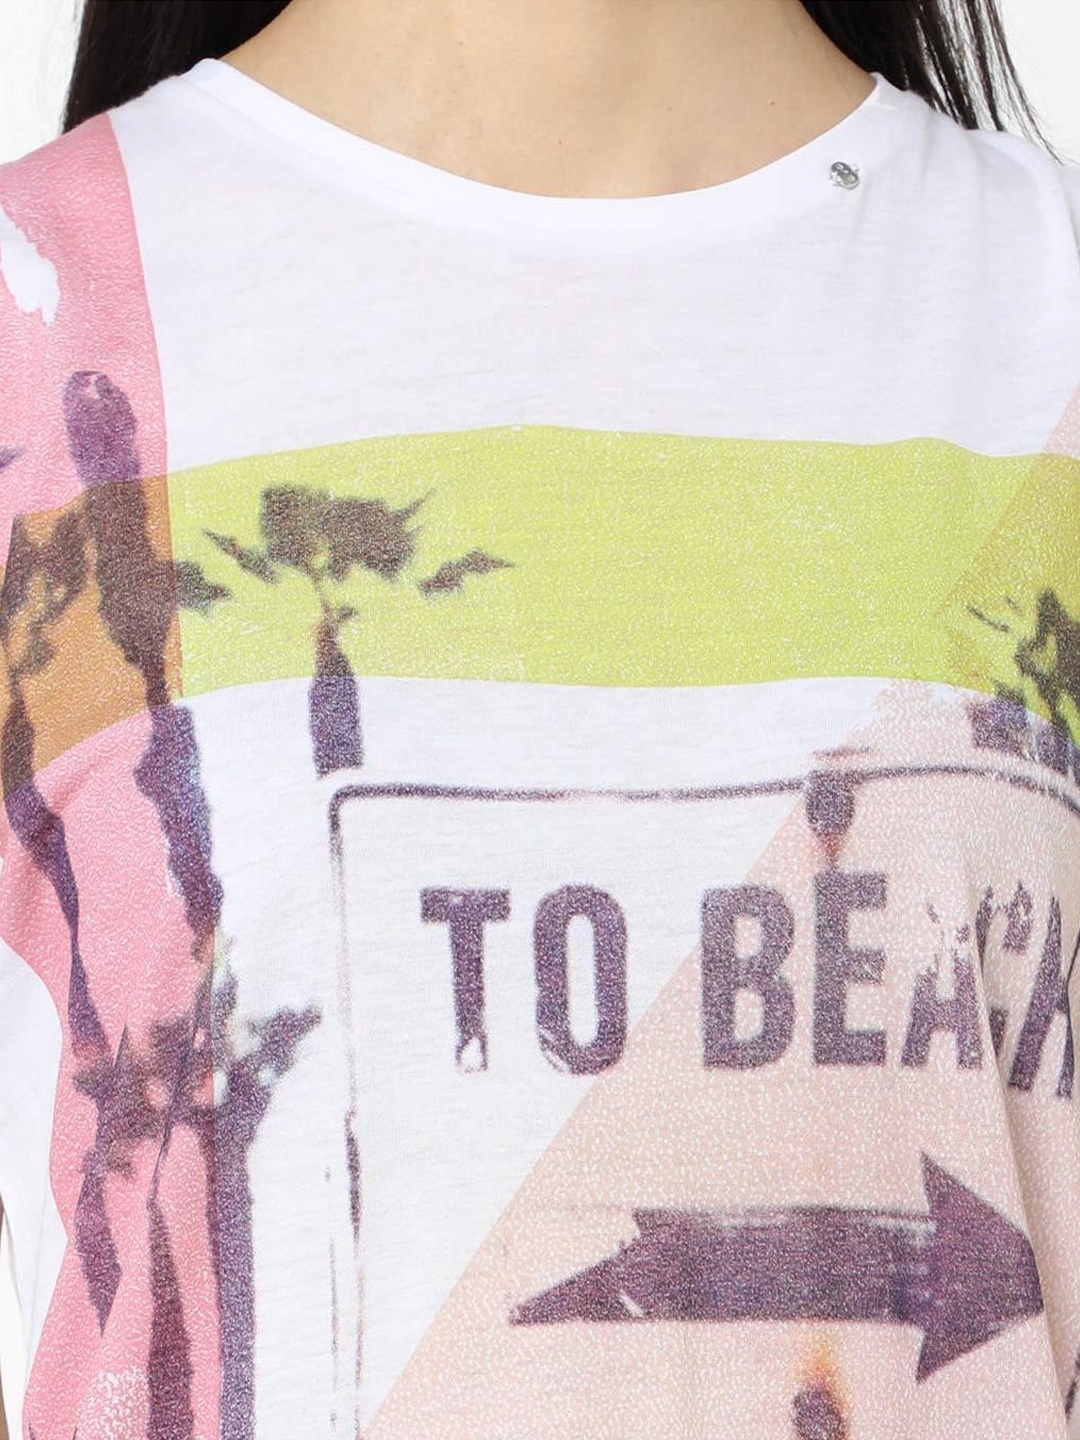 Meral To Beach Print Round-Neck T-shirt